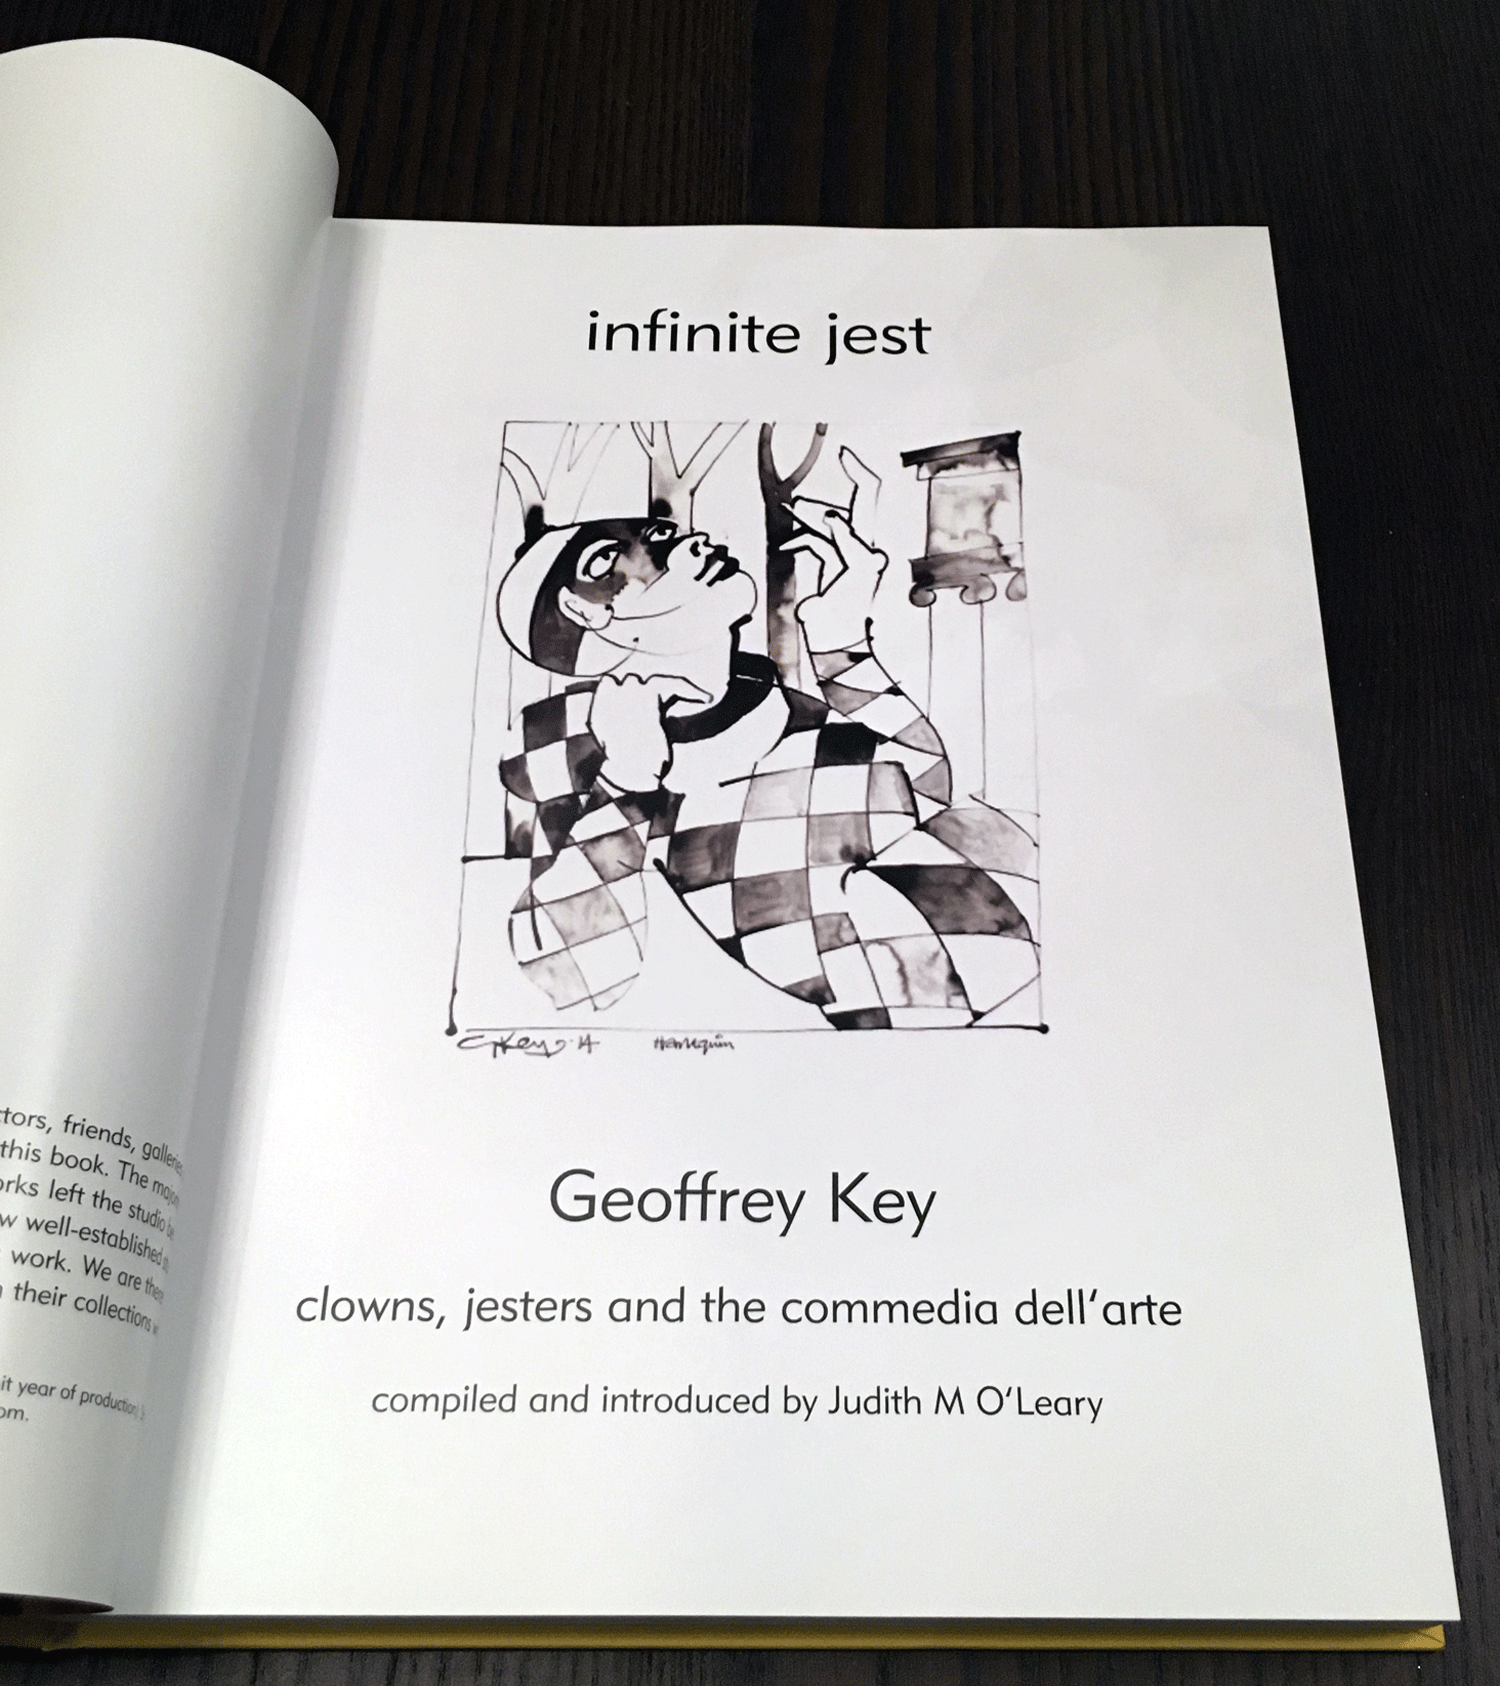 GEOFFREY KEY LIMITED EDITION 'INFINITE JEST' ART CLOWN BOOK BY JUDITH M O'LEARY 